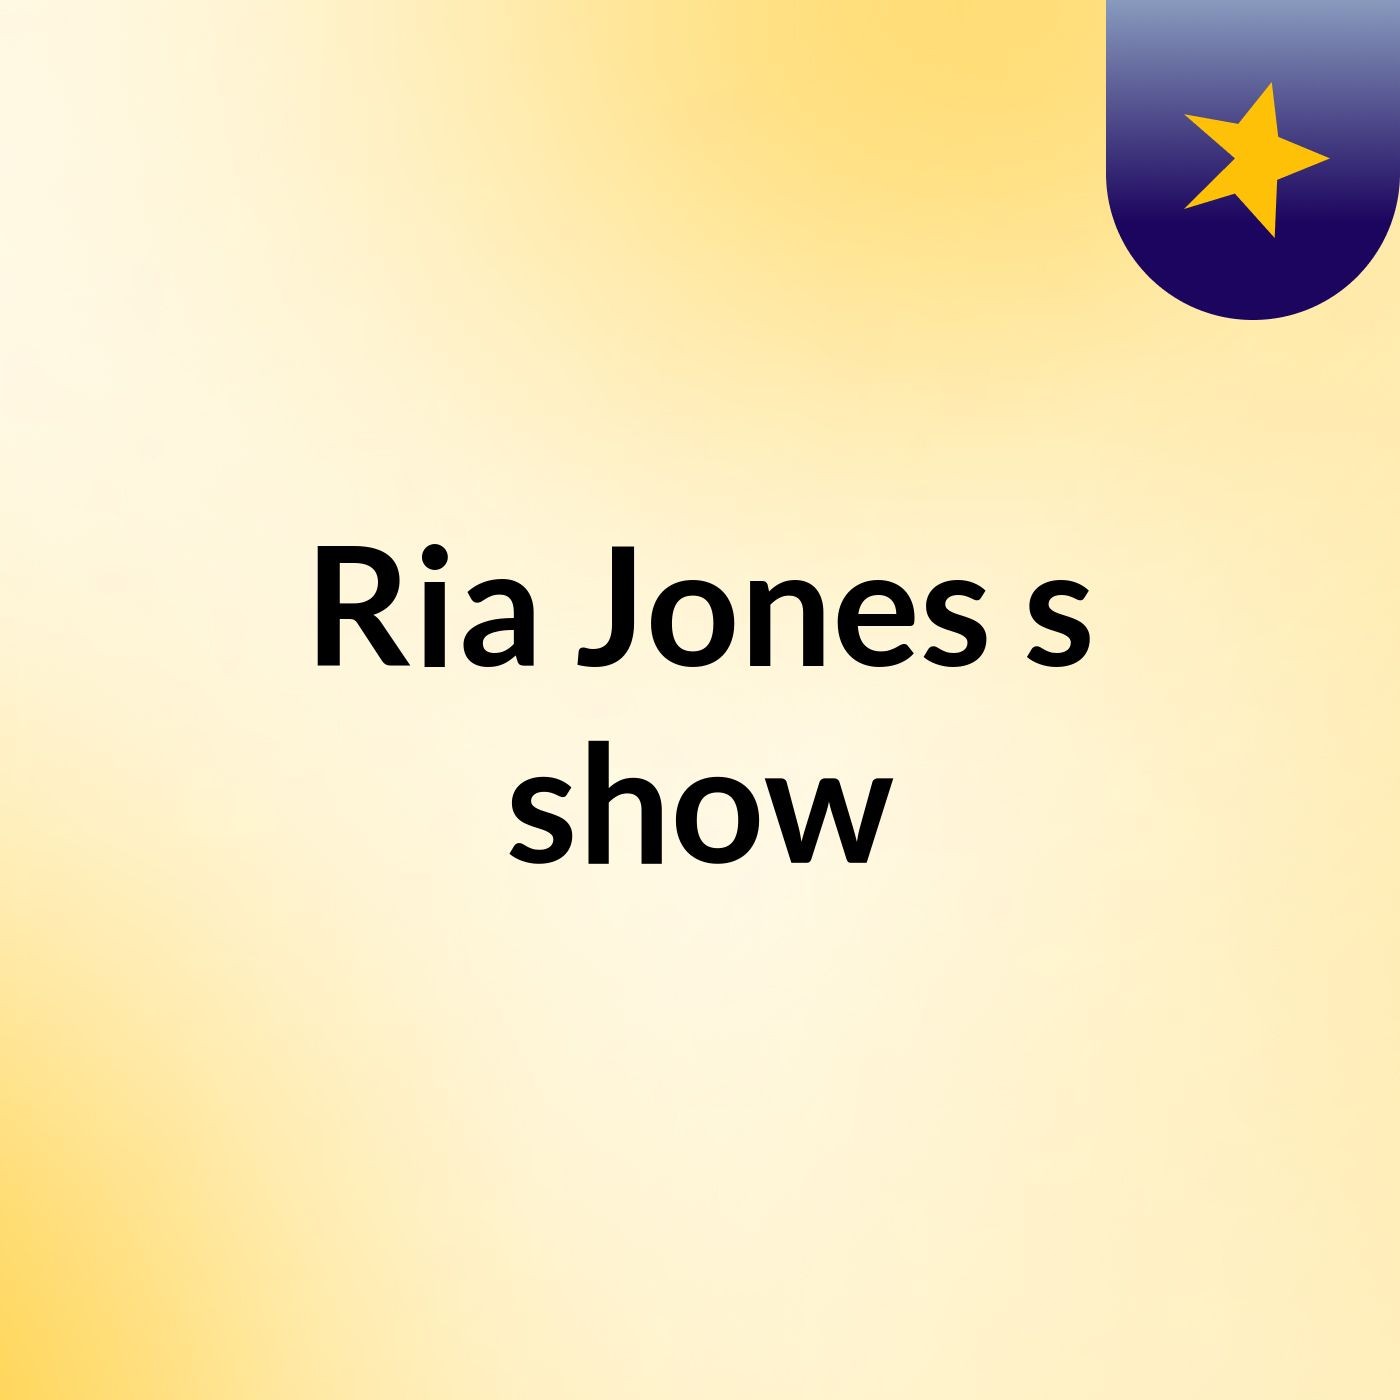 Ria Jones's show